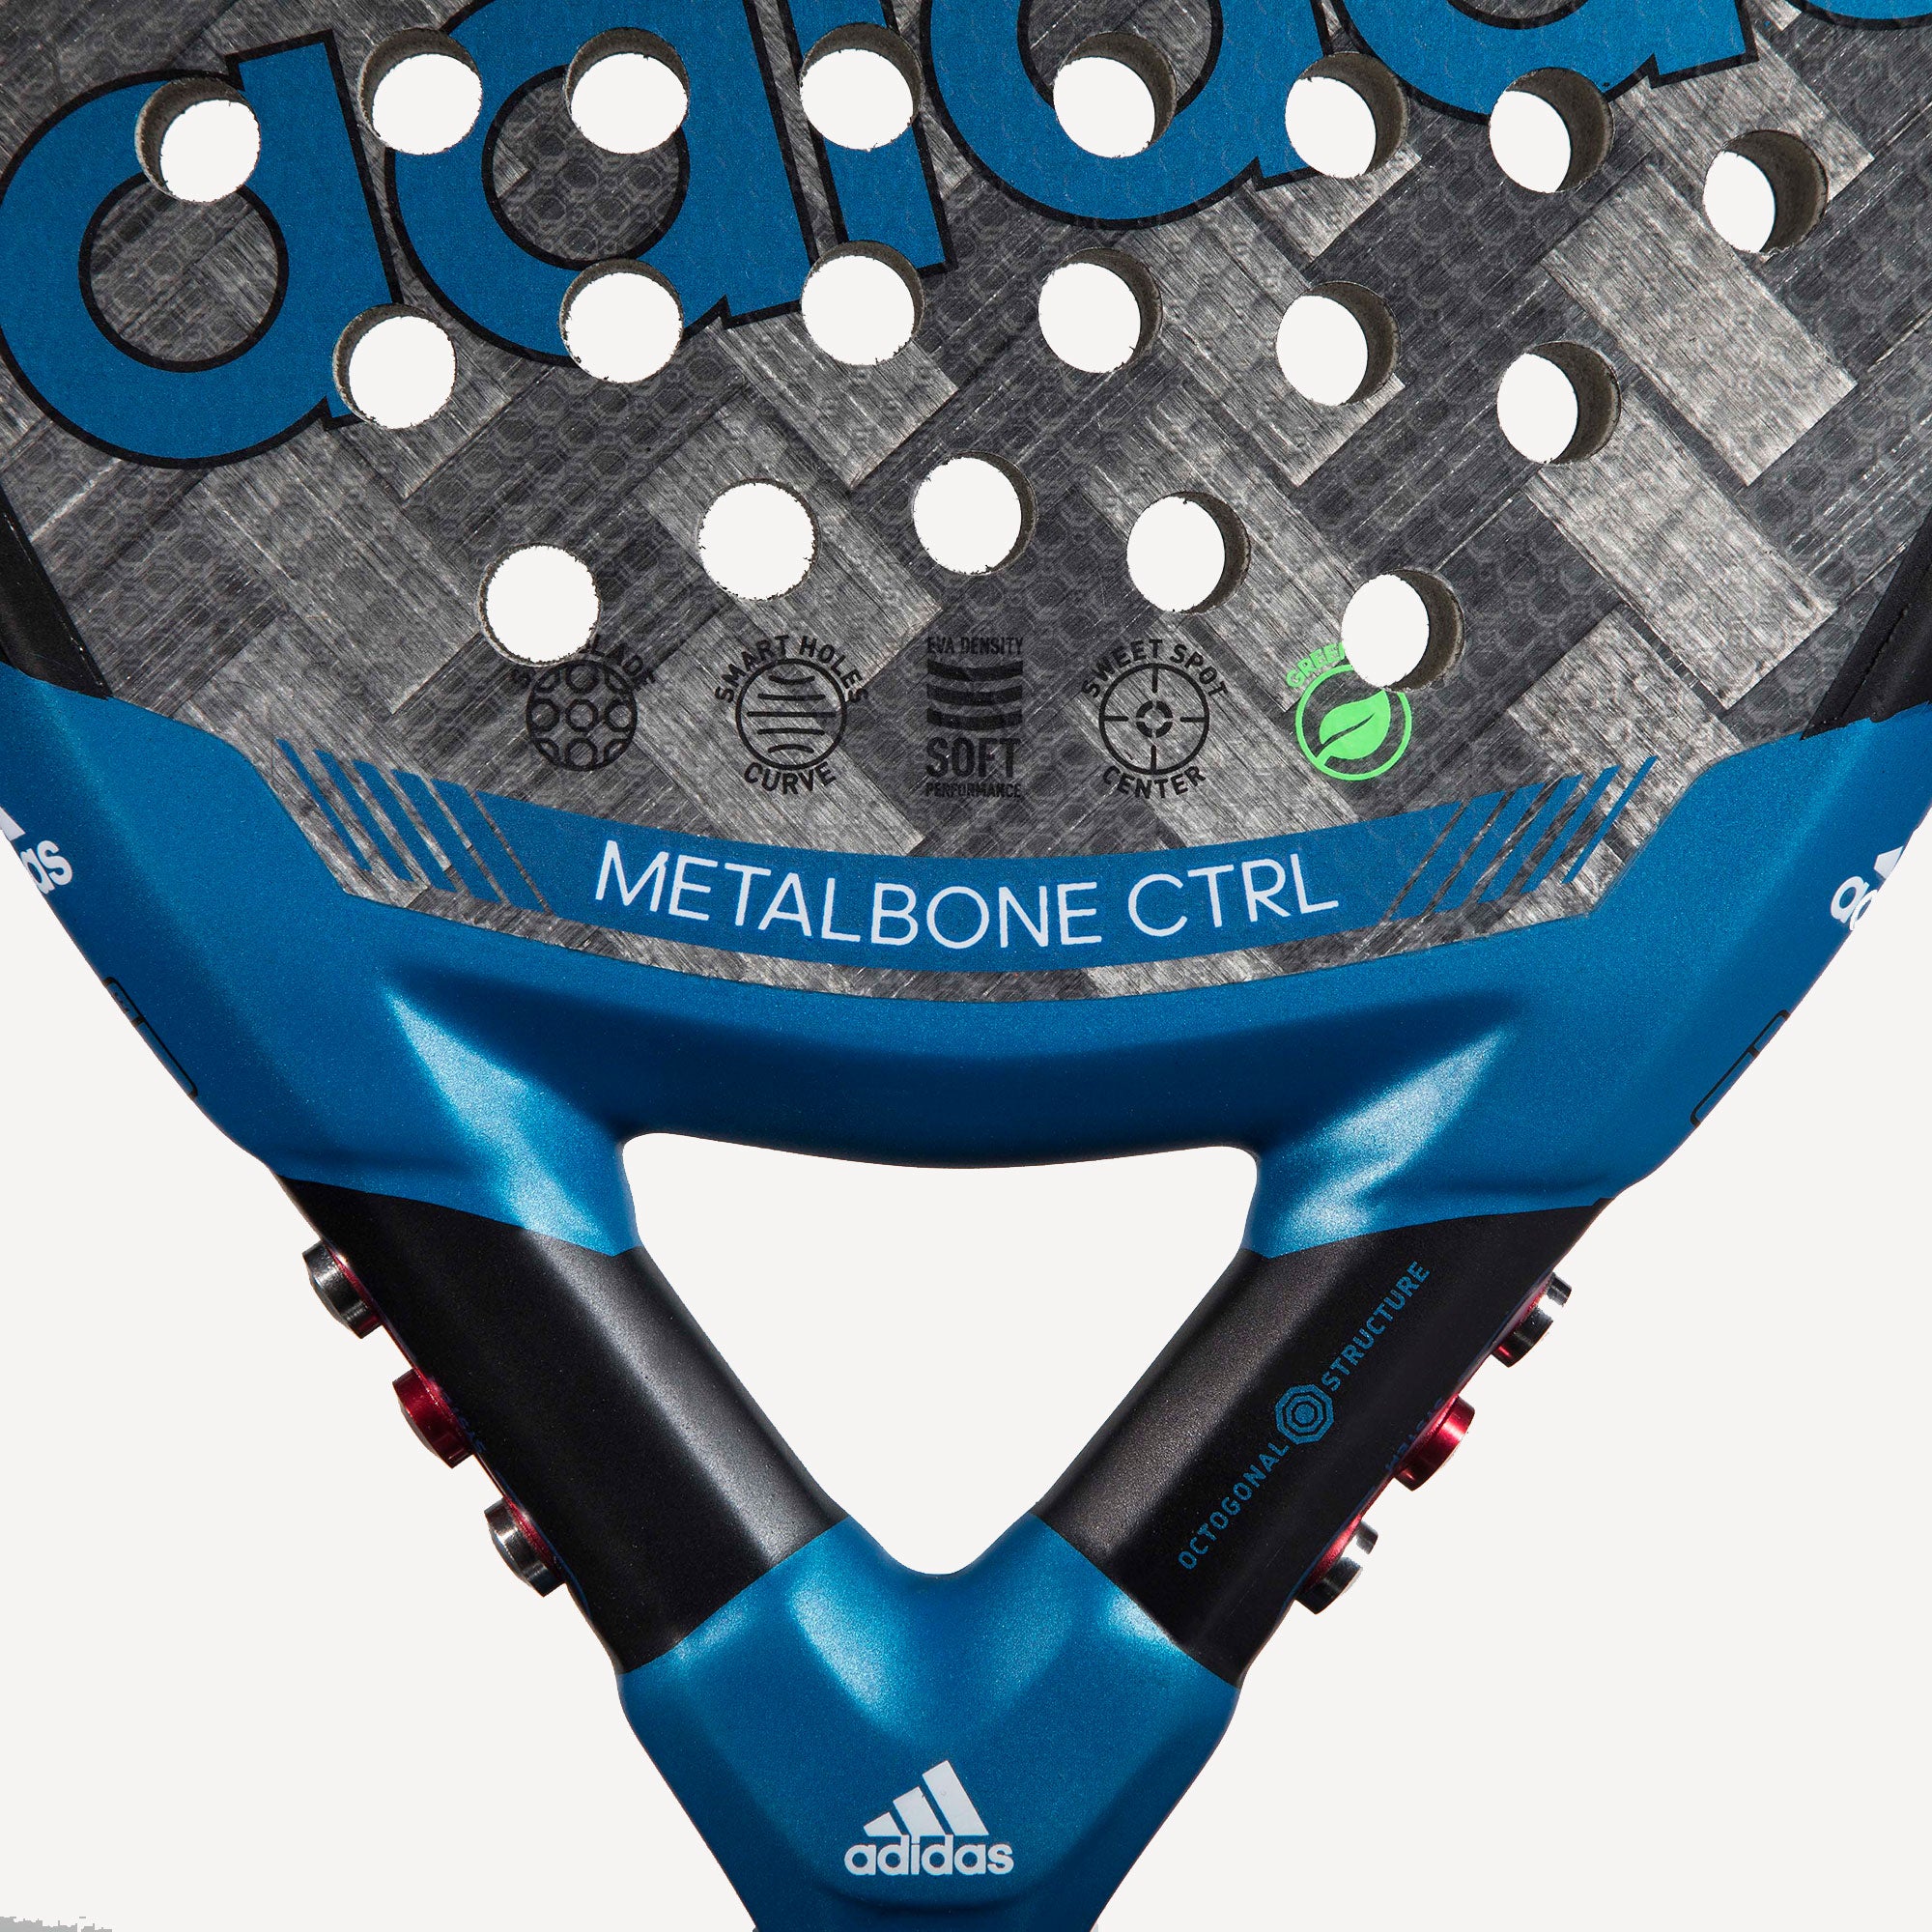 adidas Metalbone CTRL 3.1 Padel Racket 4